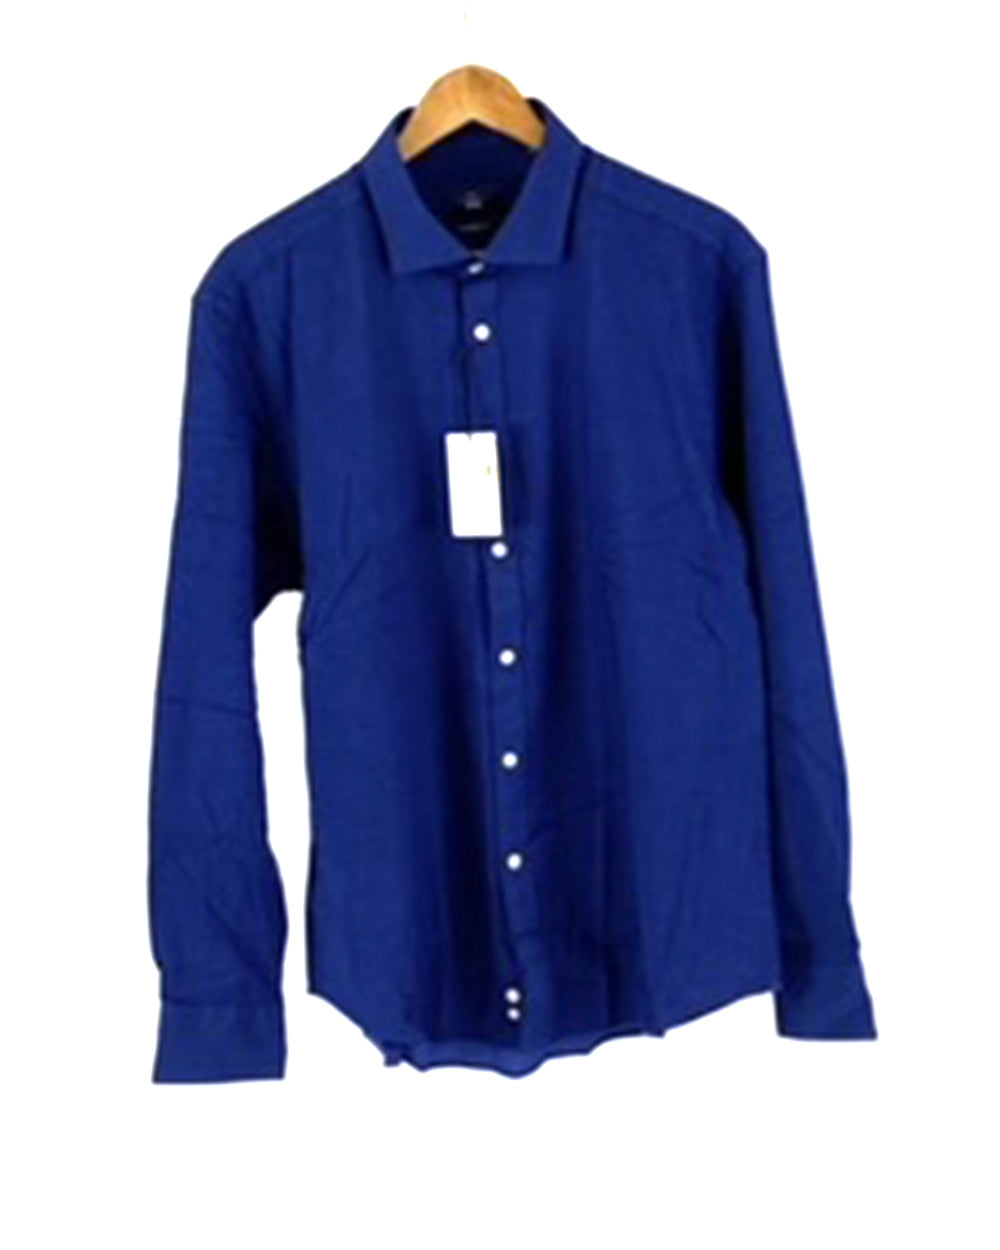 Moss Bros Blue Shirt Tailored Fit